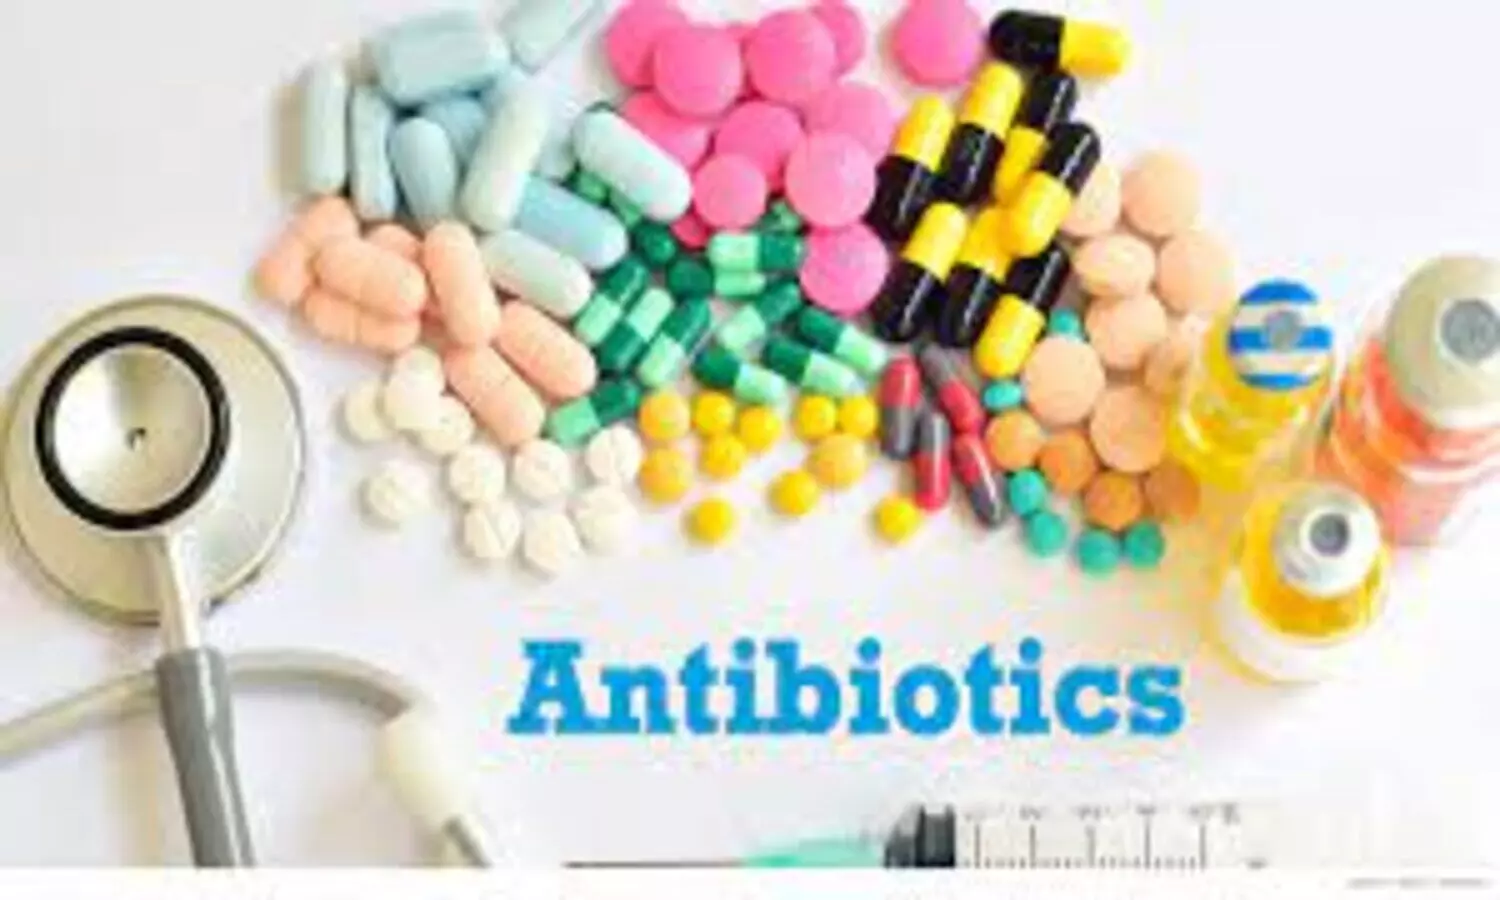 Excessive antibiotics dangerous to health